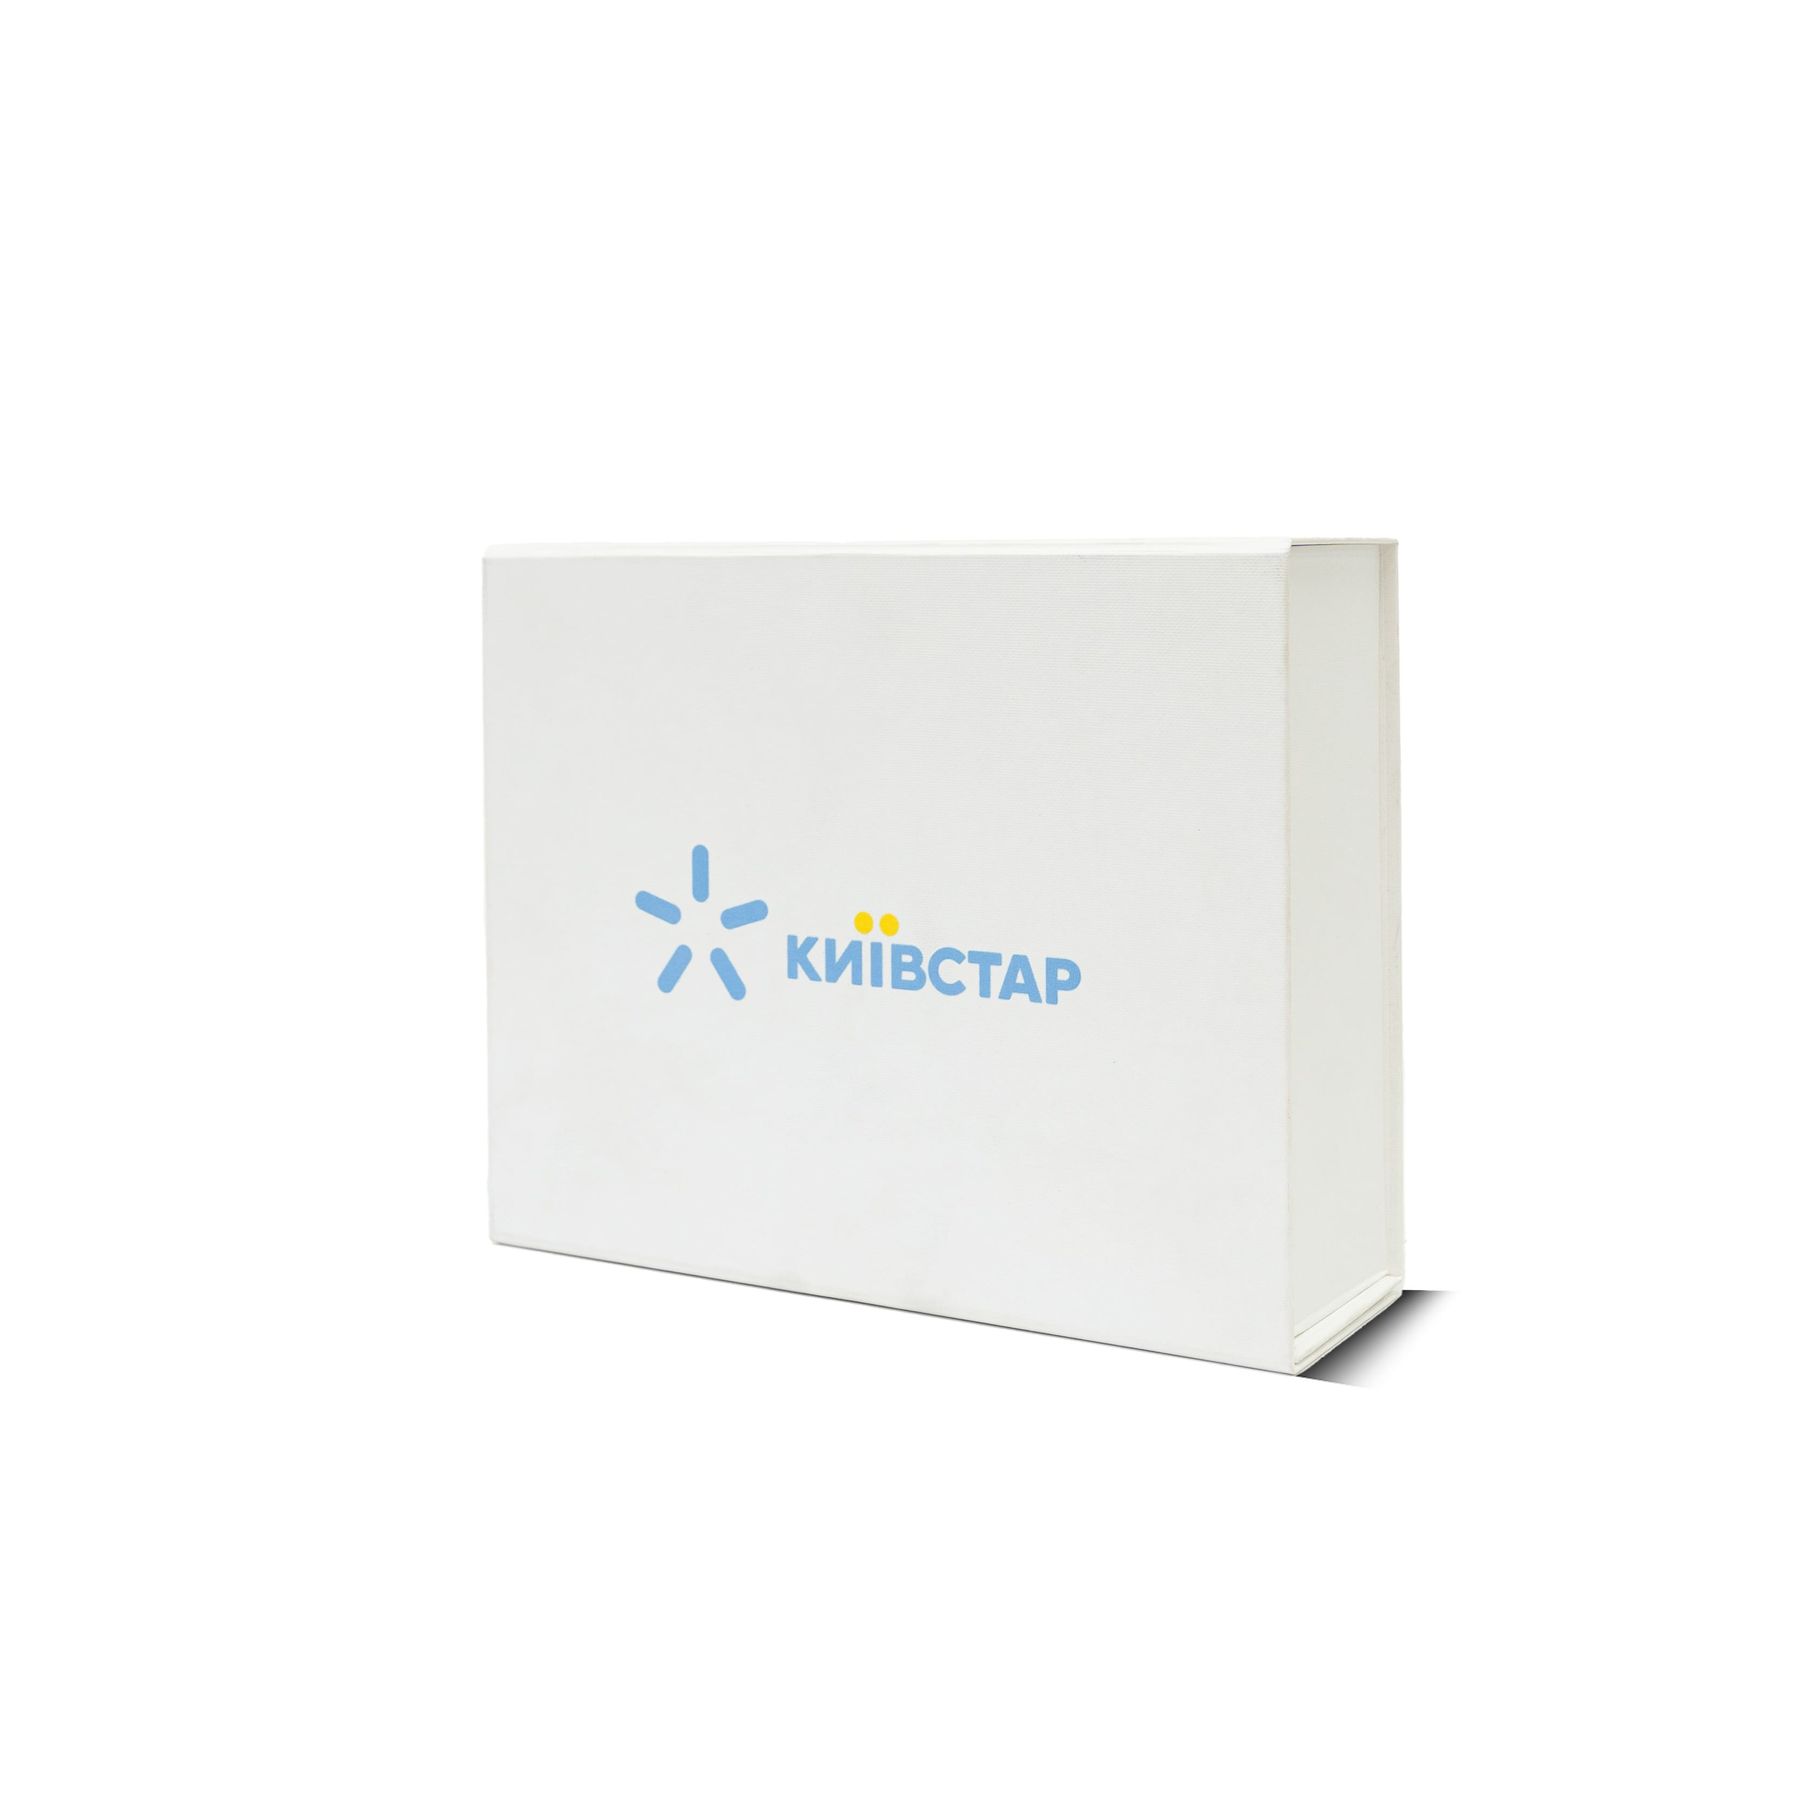 White gift cardboard box "snuff box" - 28-23-9